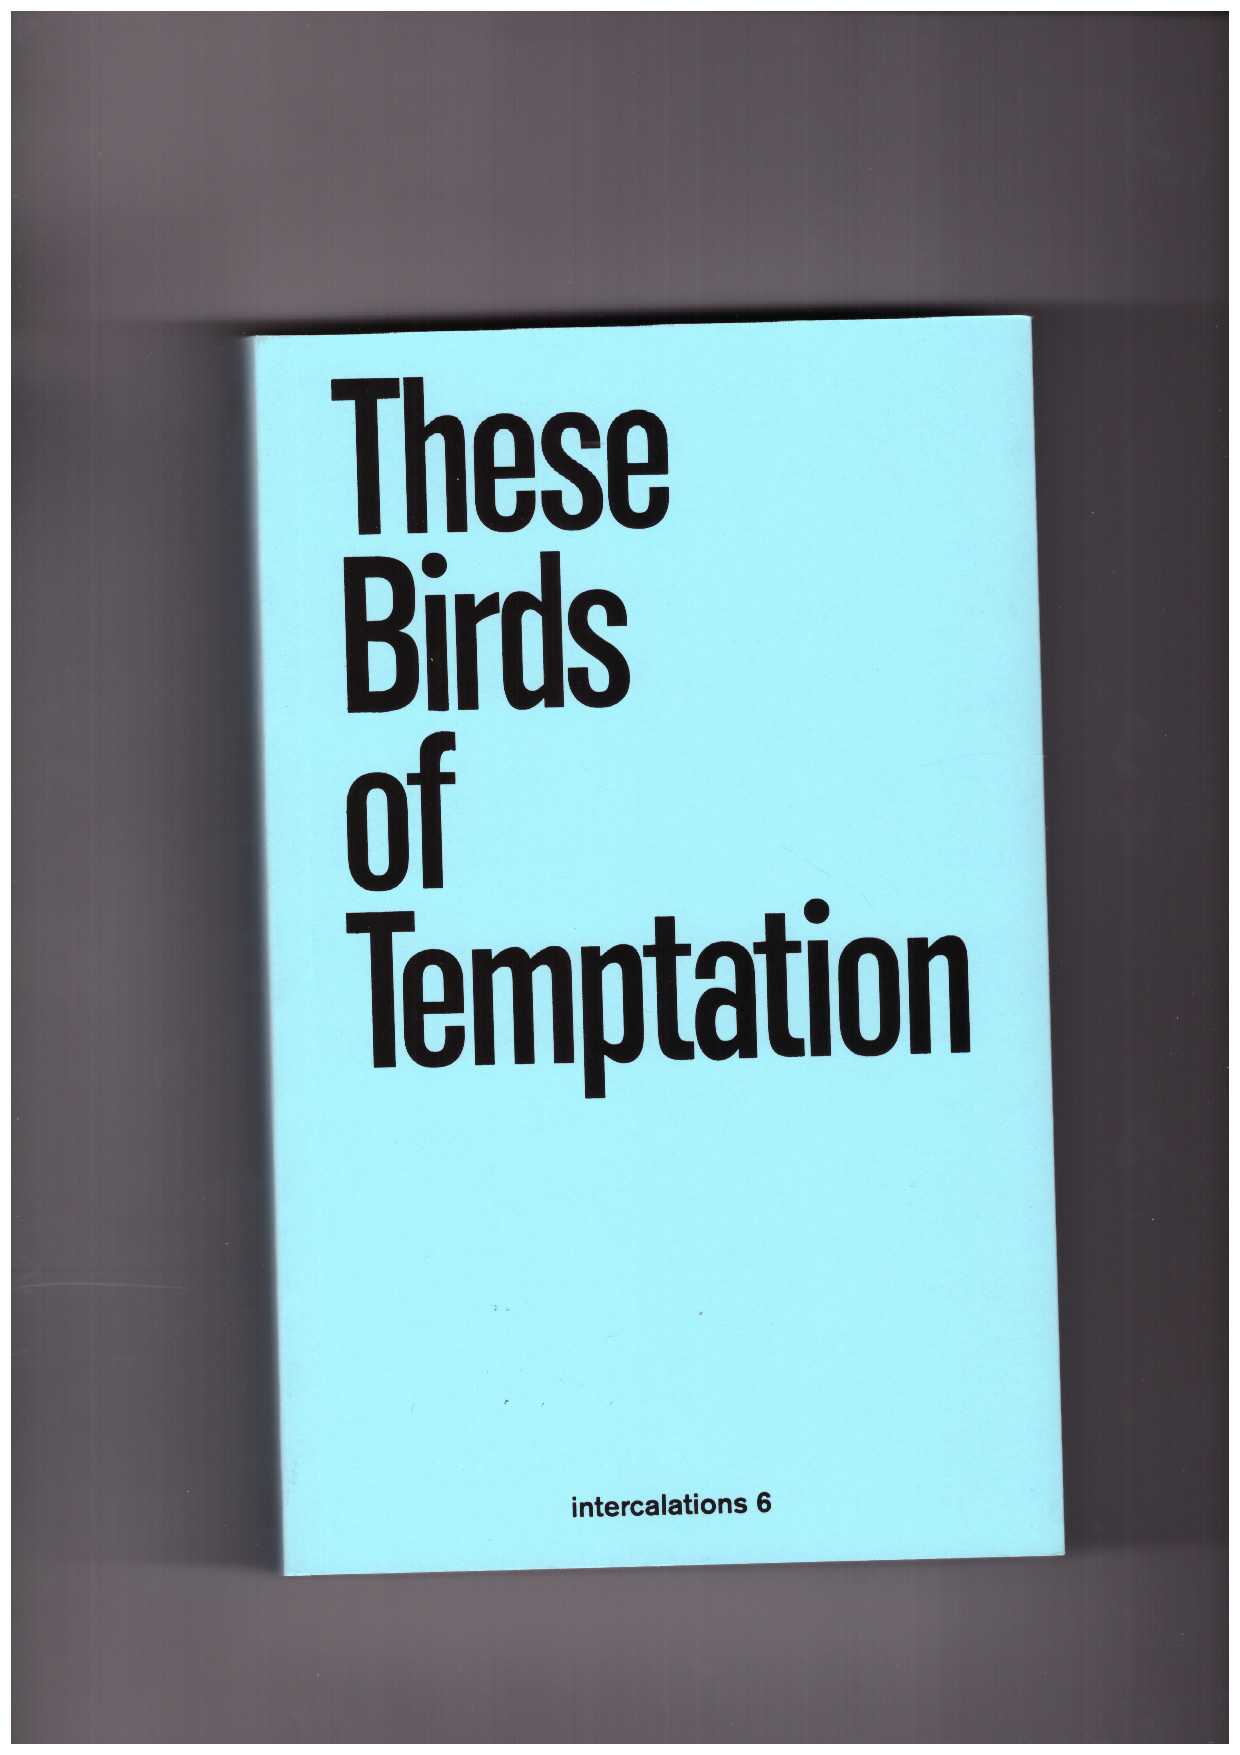 SPRINGER, A-S. ; TURPIN, E. (eds) - These Birds of Temptation